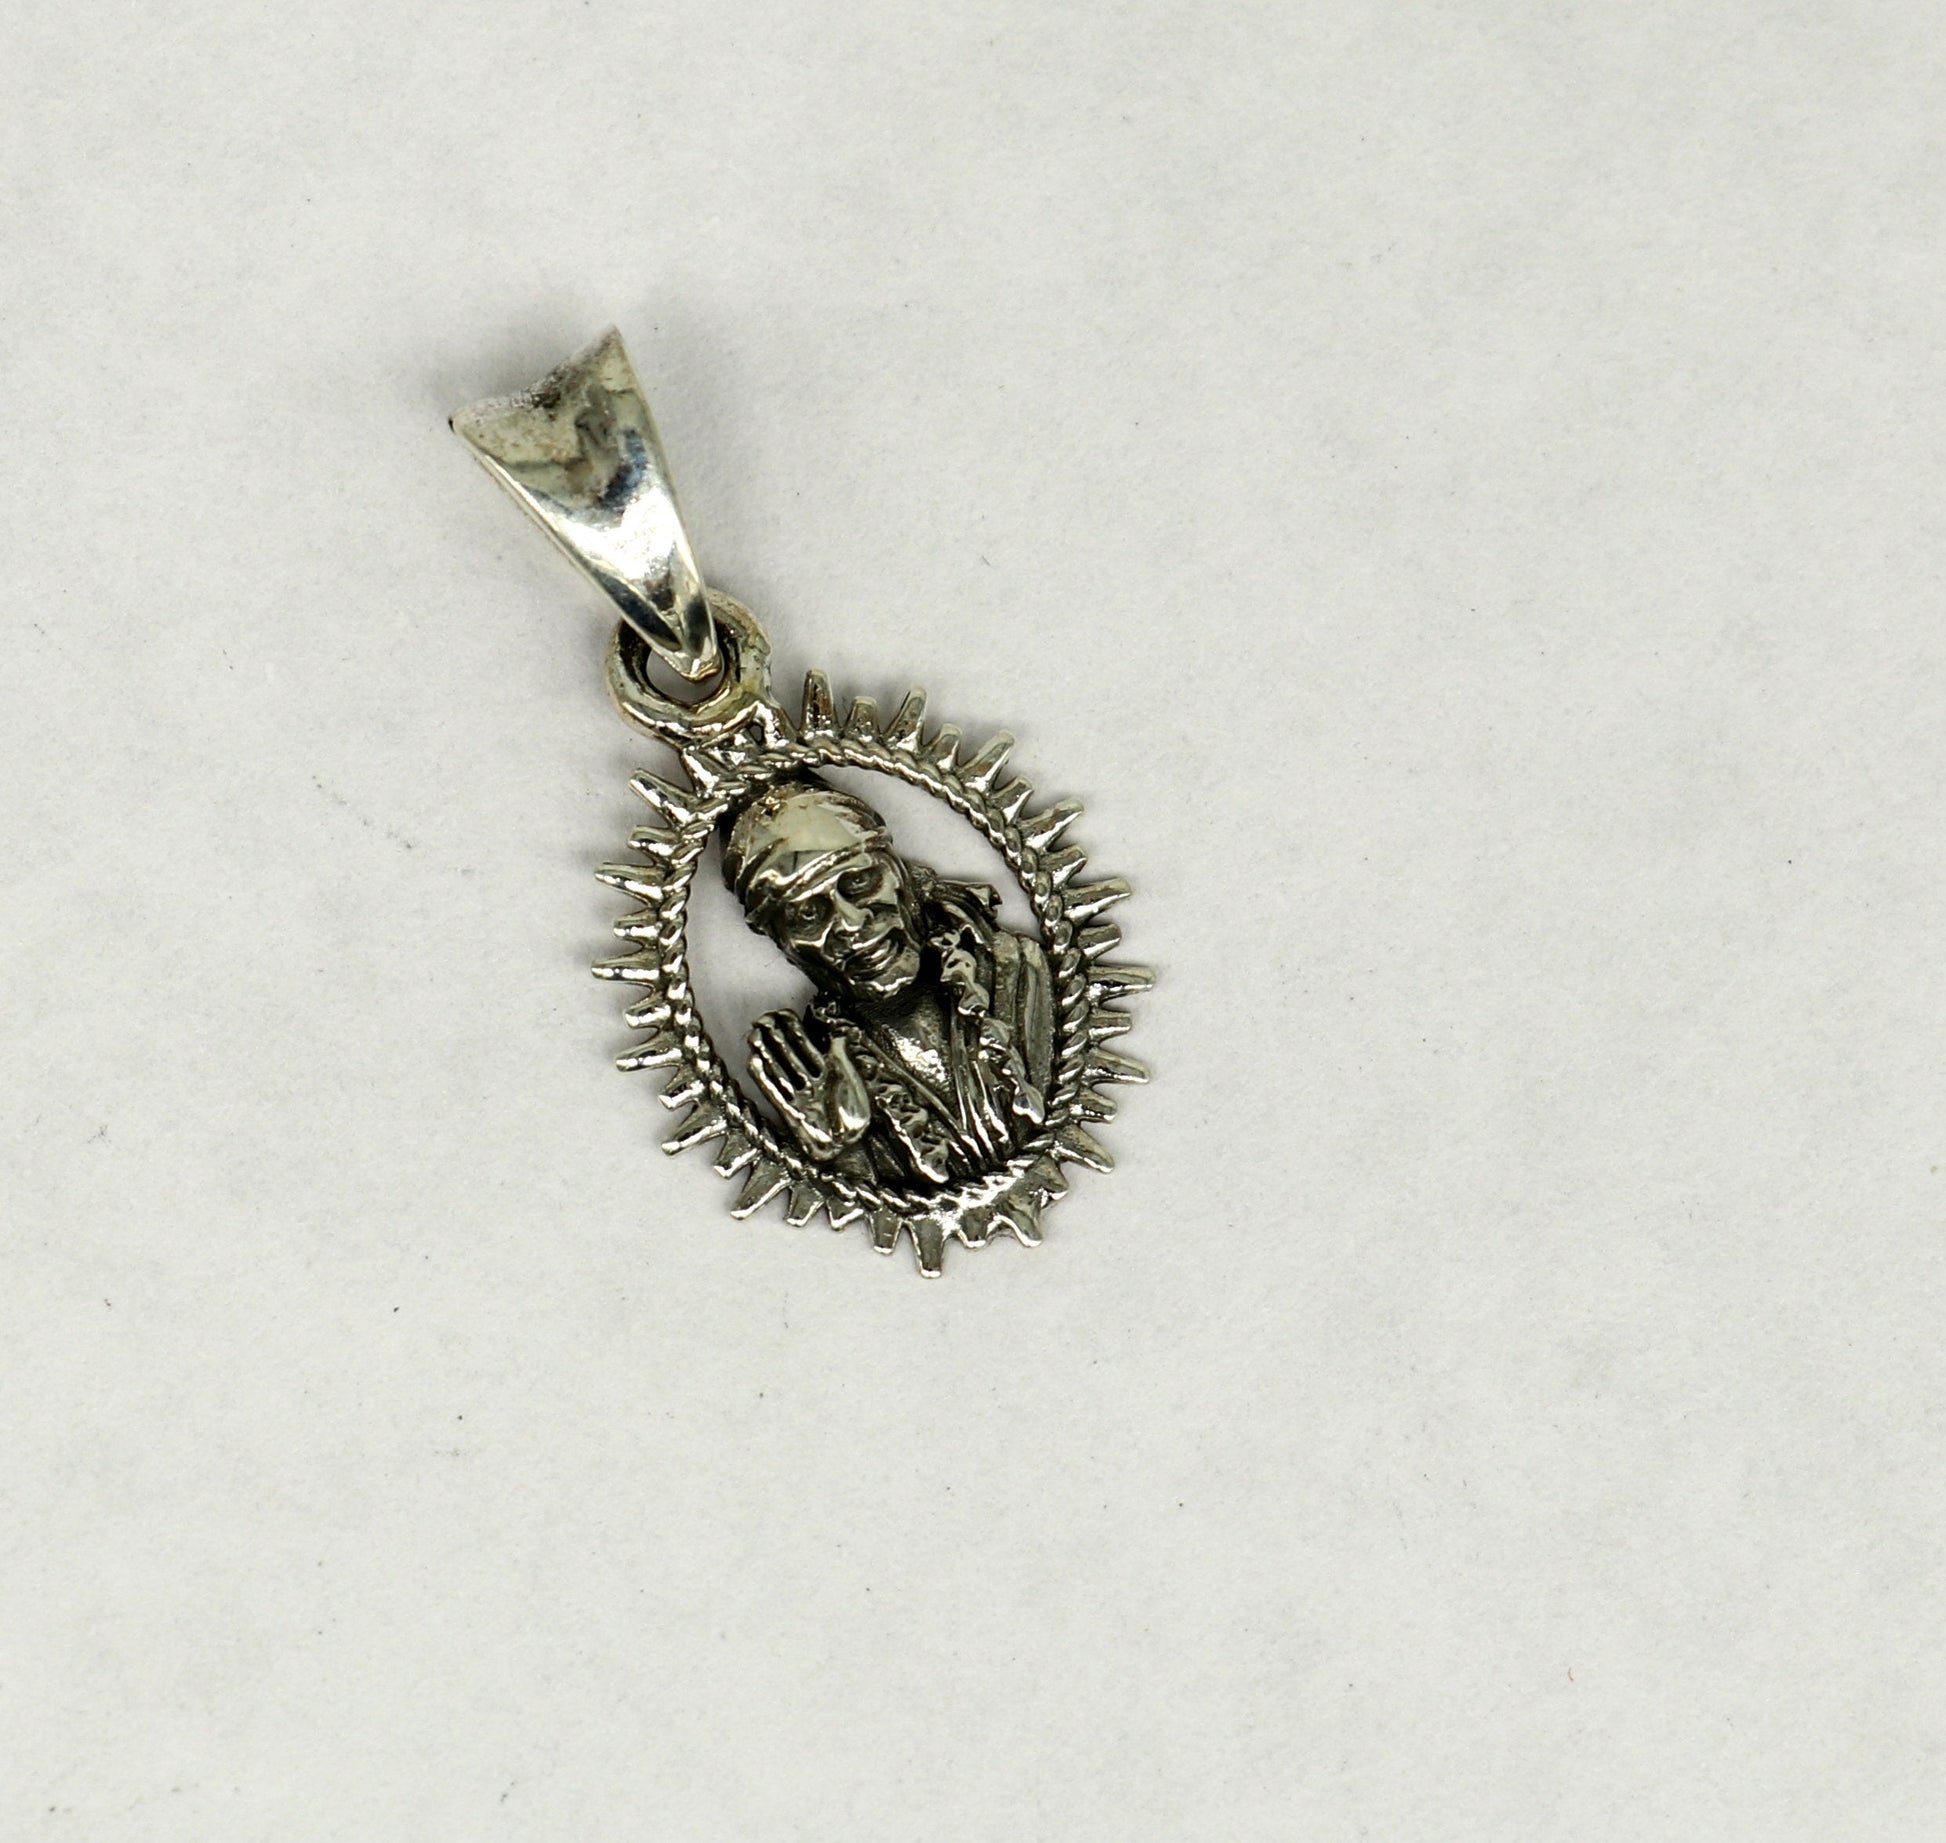 925 sterling silver handmade Indian idol Sai Baba pendant, amazing stylish unisex pendant locket personalized jewelry tribal jewelry ssp518 - TRIBAL ORNAMENTS